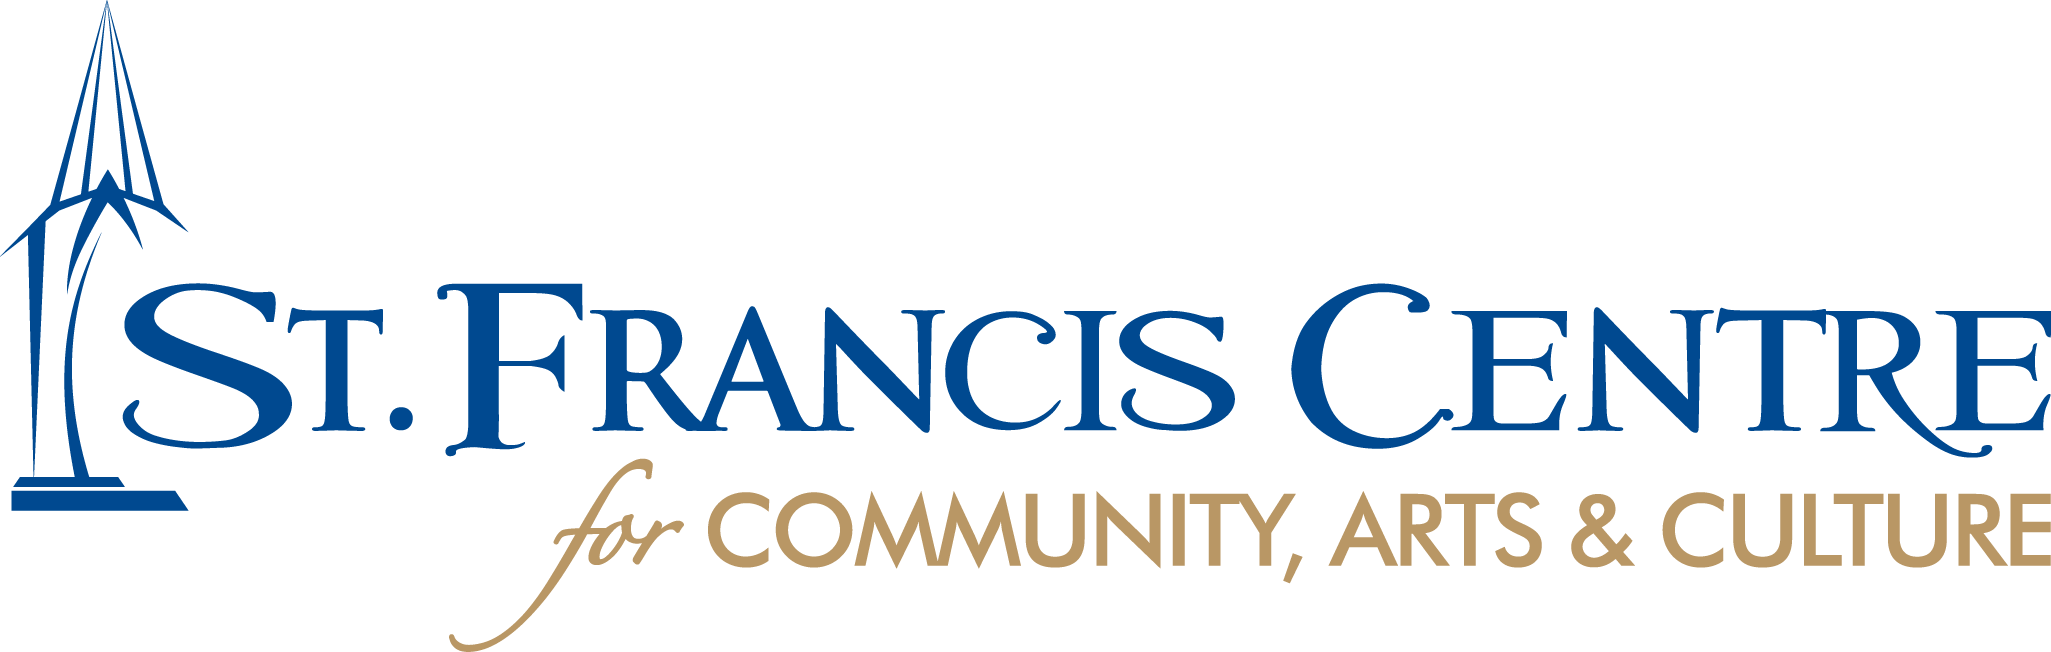 St. Francis Centre logo.